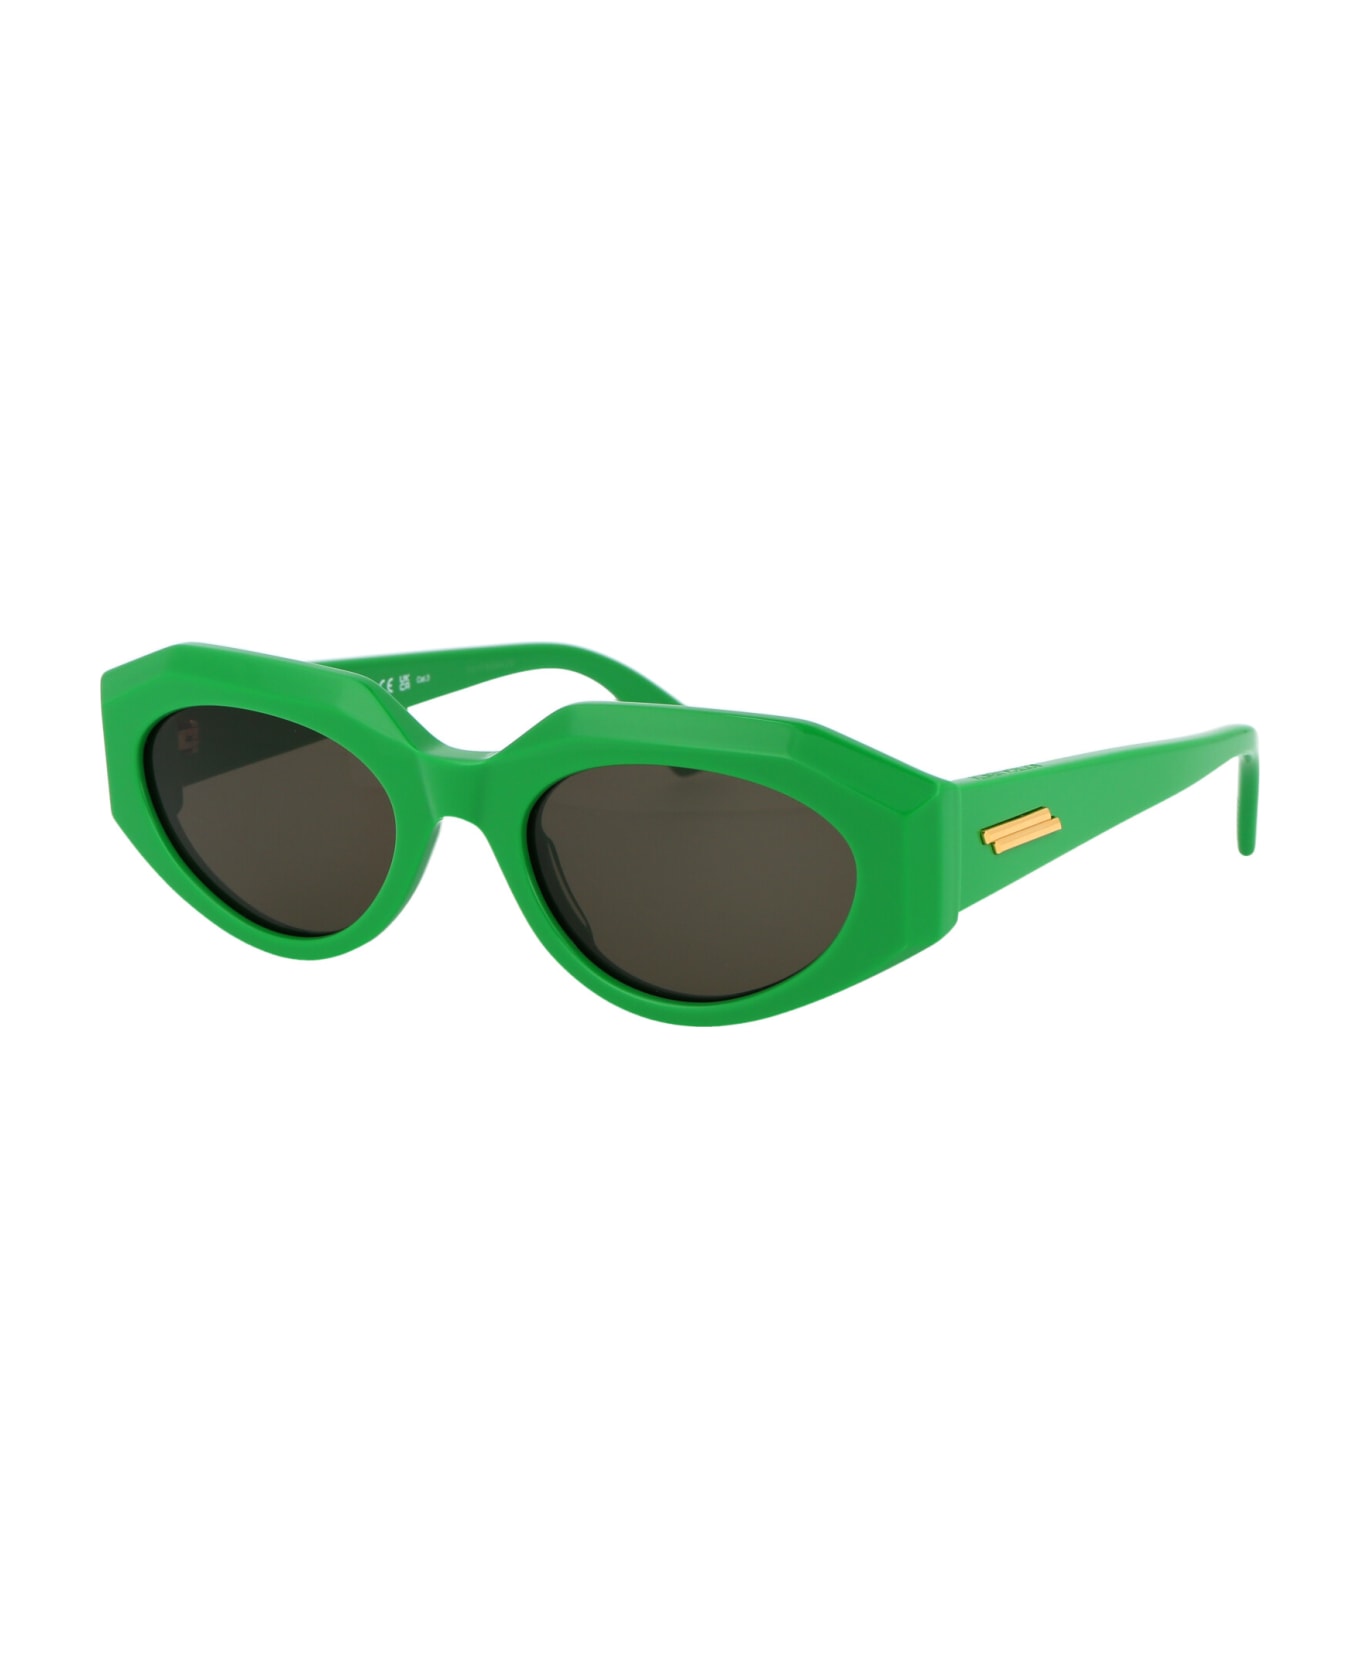 Bottega Veneta Eyewear Bv1031s Sunglasses - 005 GREEN GREEN GREEN